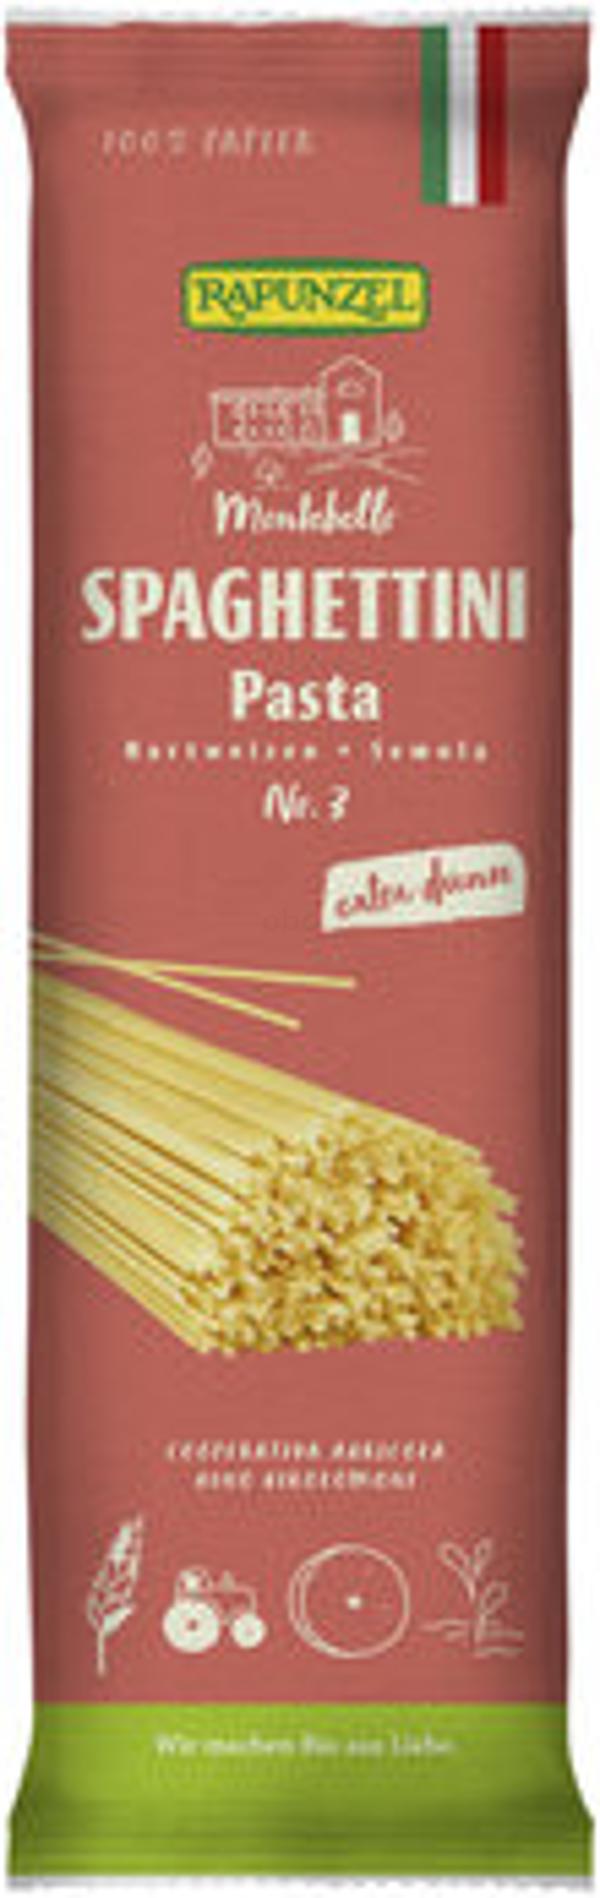 Produktfoto zu Spaghettini No.3 extradünn